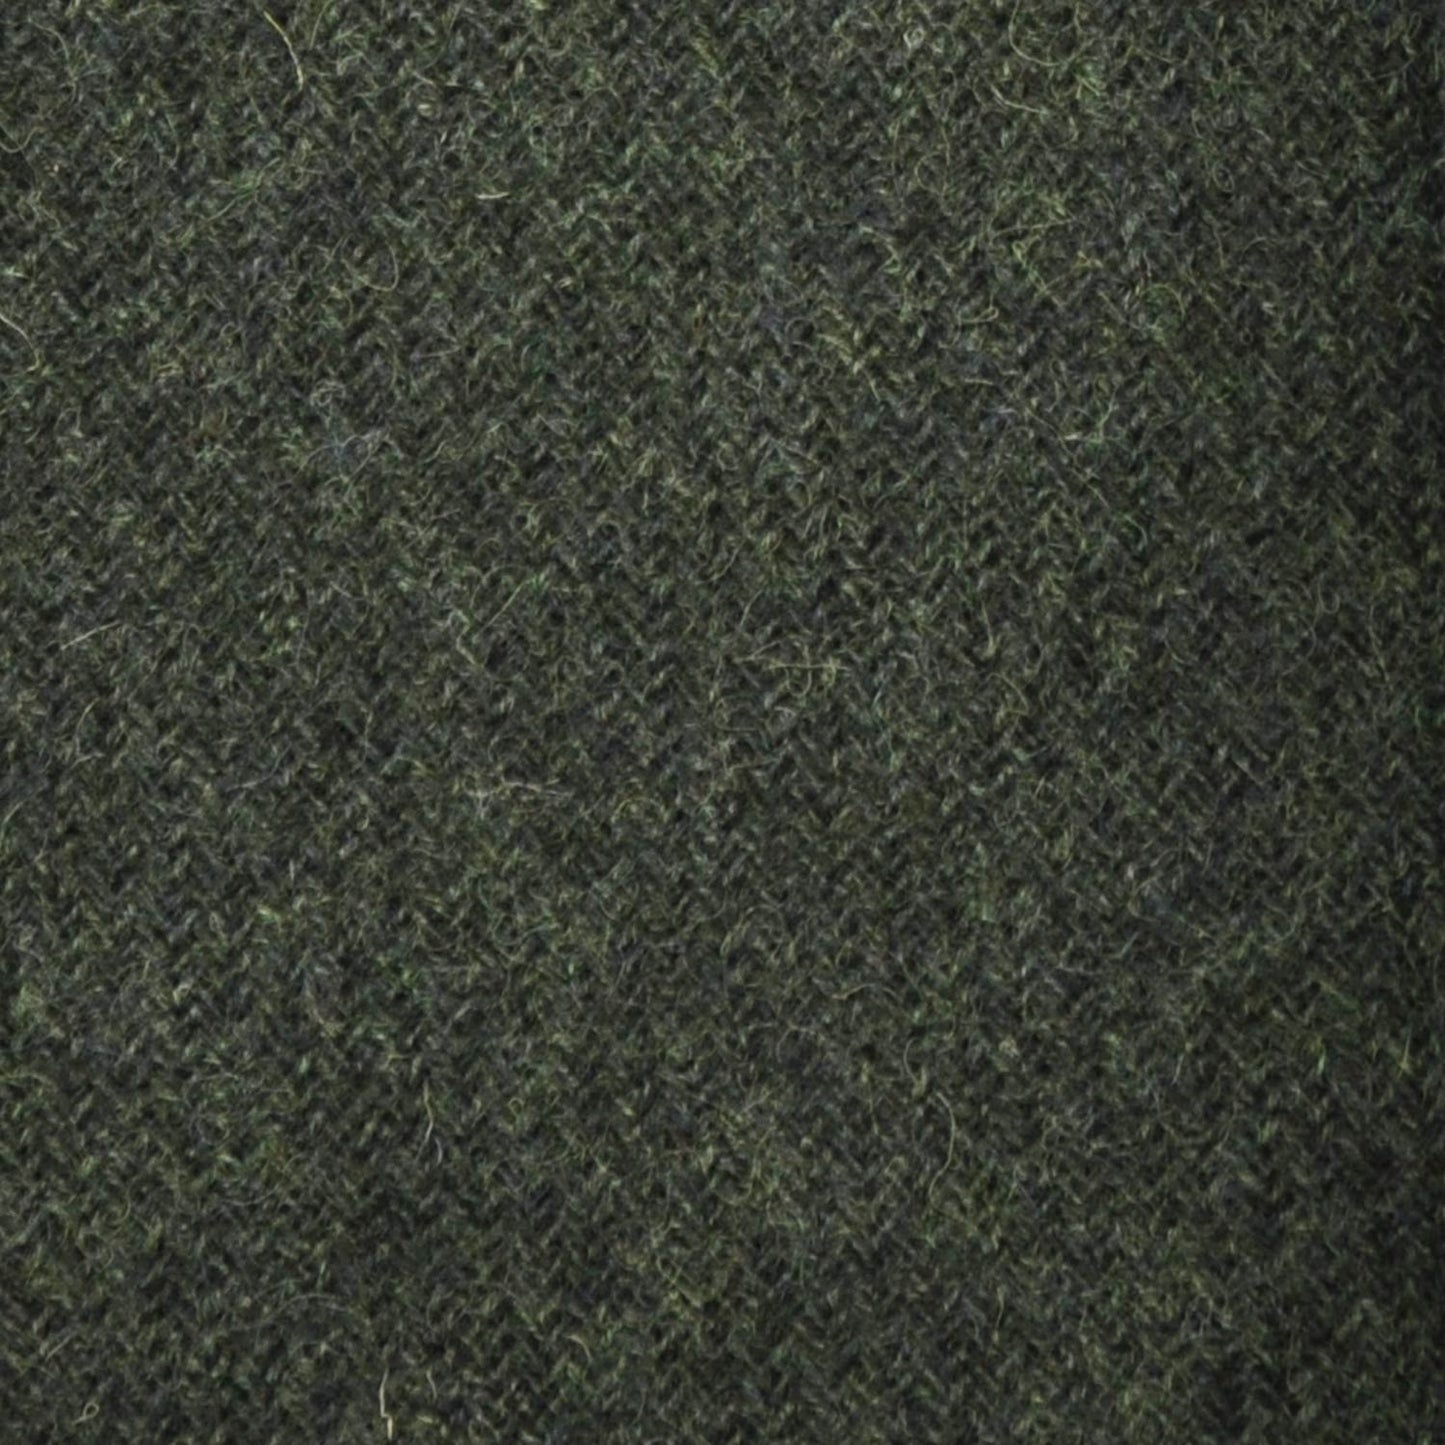 F.Marino Tweed Tie 3 Folds Bottle Green-Wools Boutique Uomo